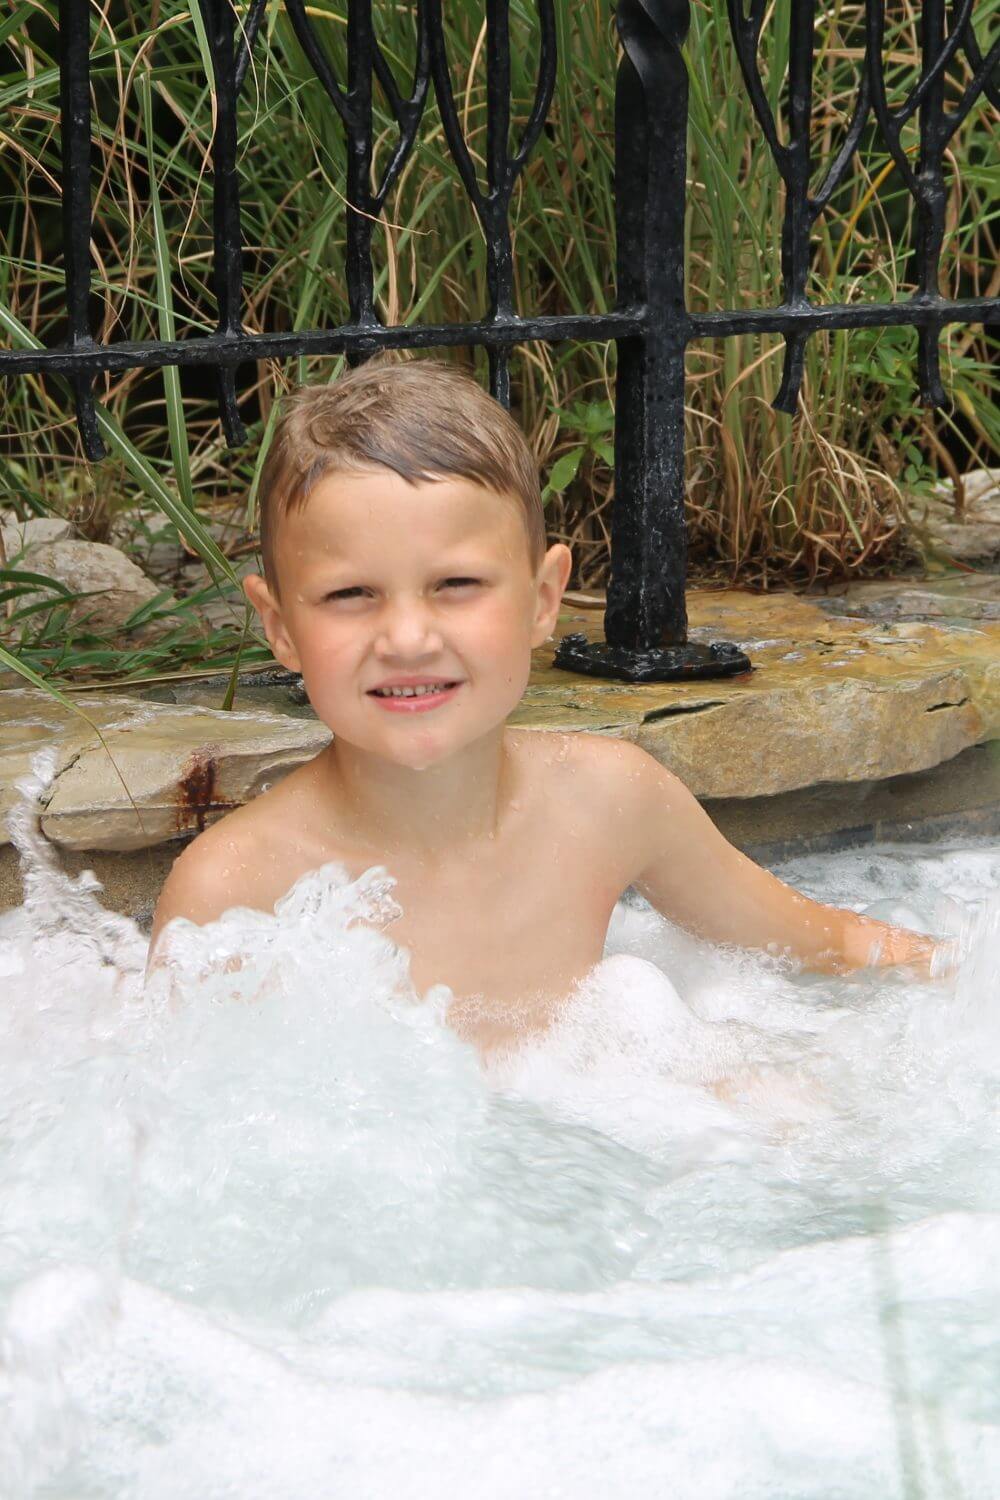 Kid enjoying the hot tub at Big Cedar Lodge